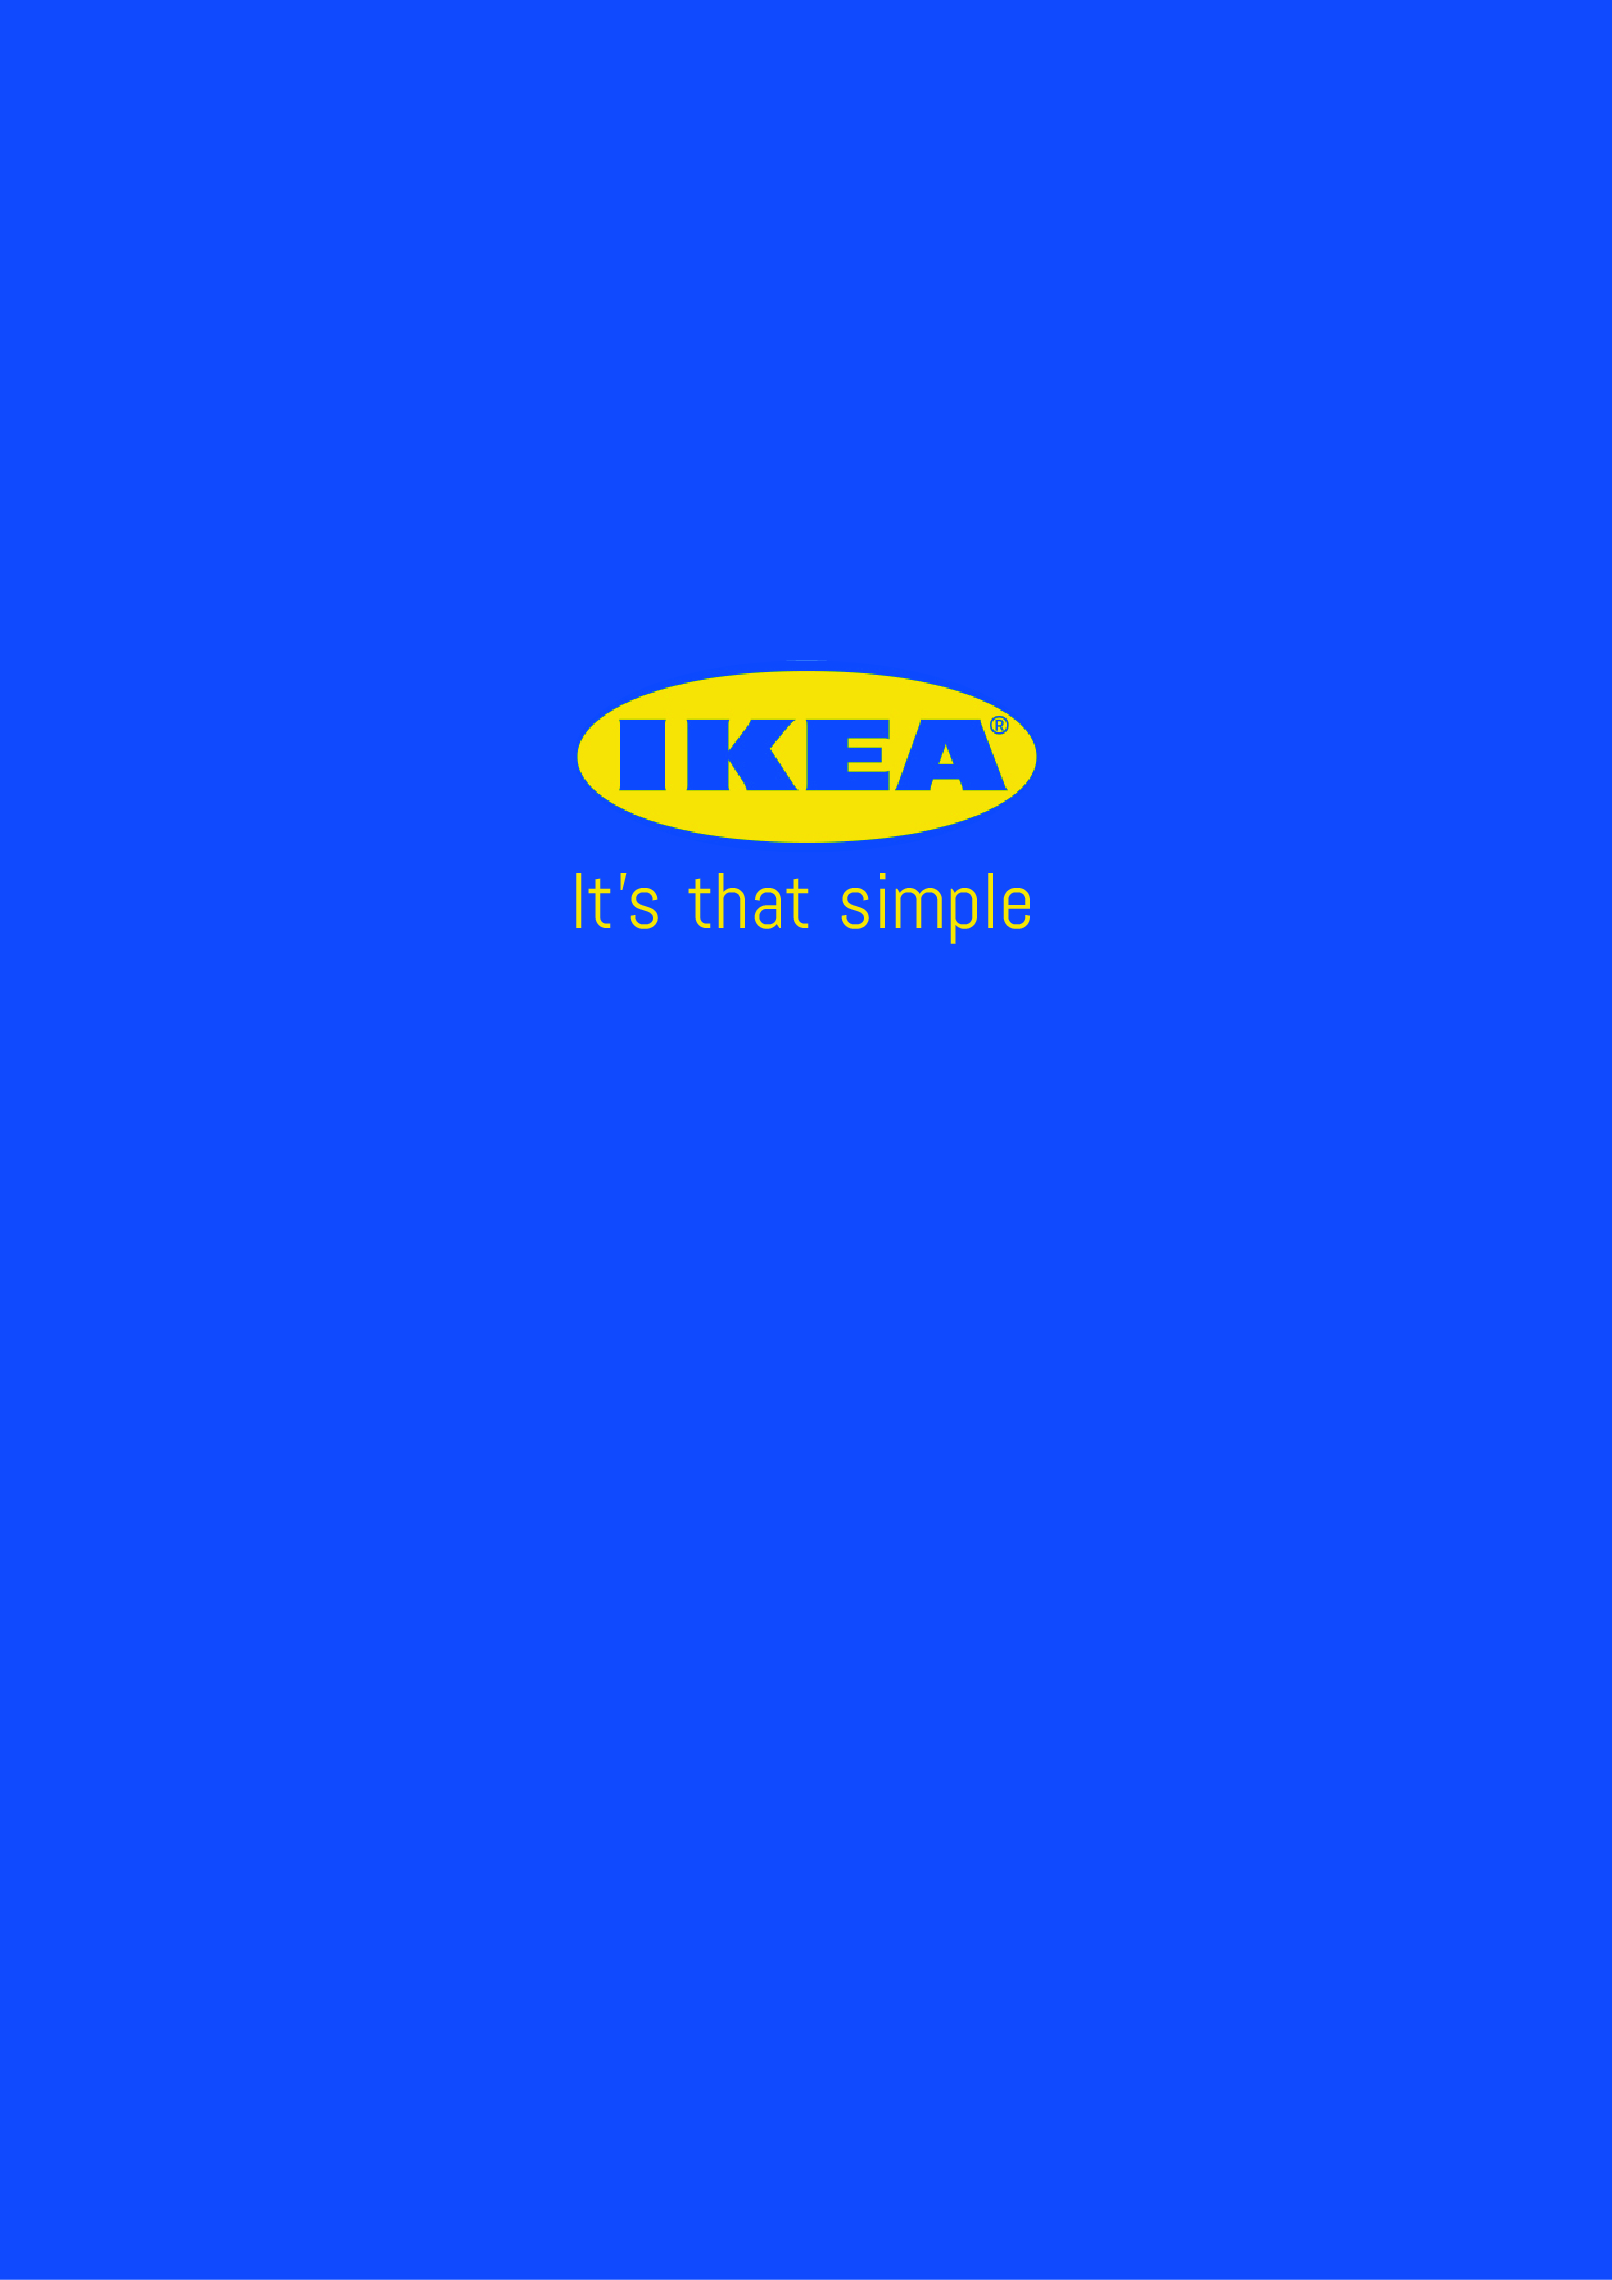 IKEA-01.jpg